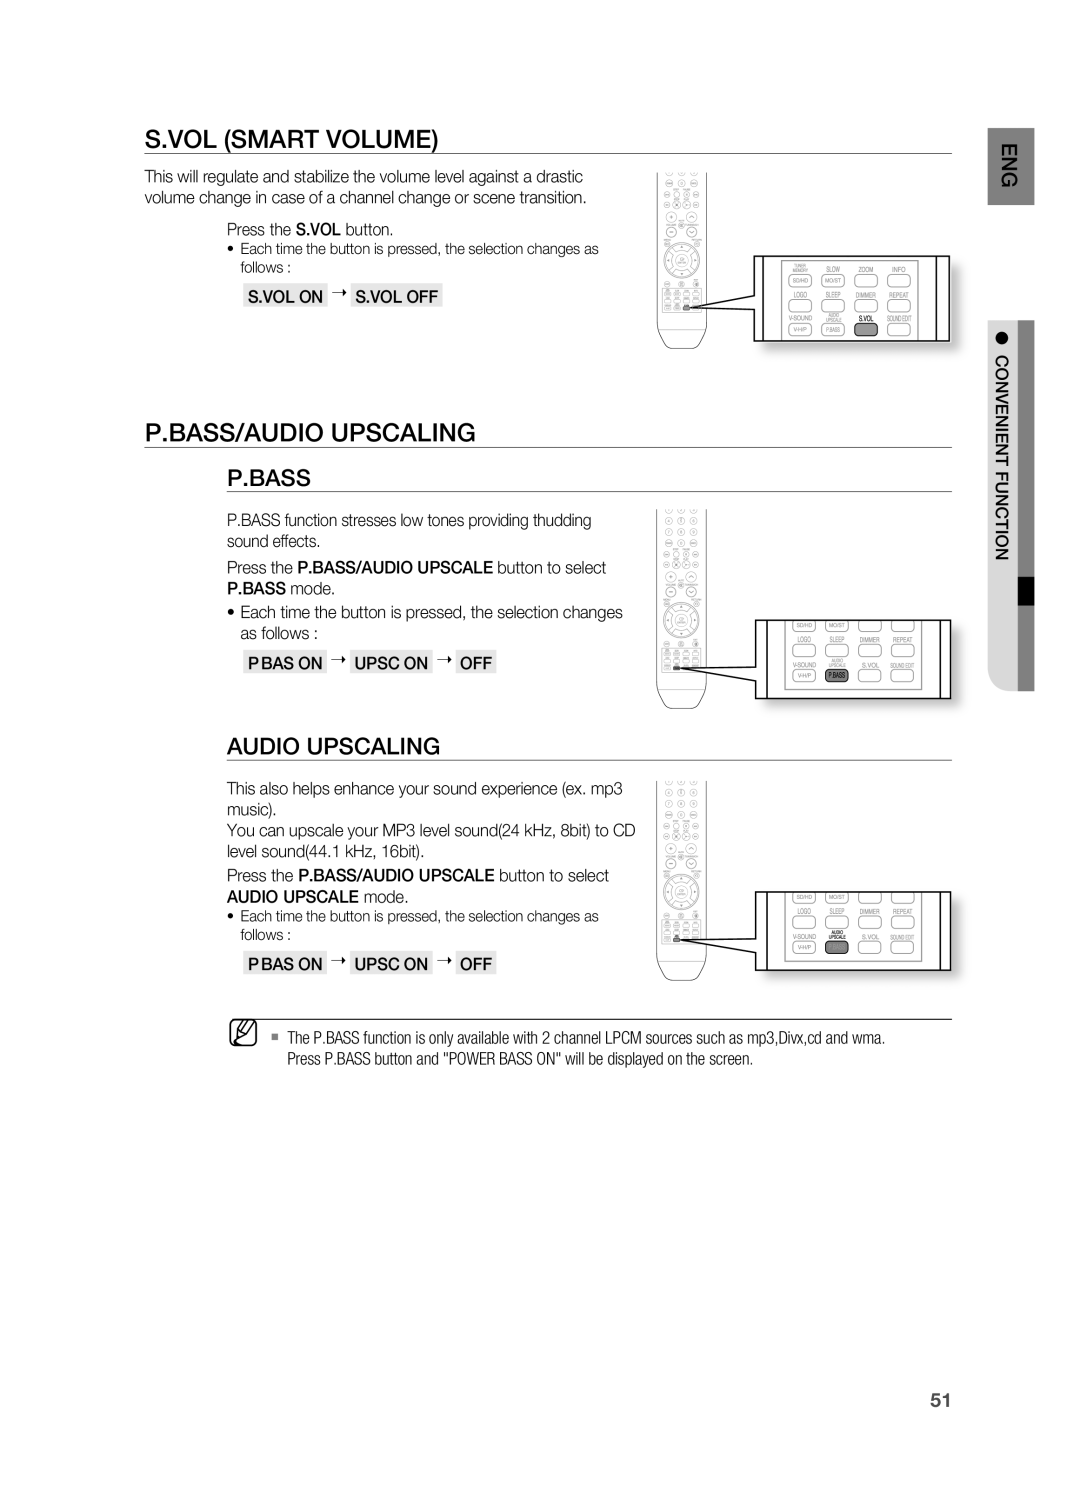 Samsung HT-X710 user manual S.VOl SMArT VOlUME, P.BASS/AUDIO UPSCAlING, P.Bass 